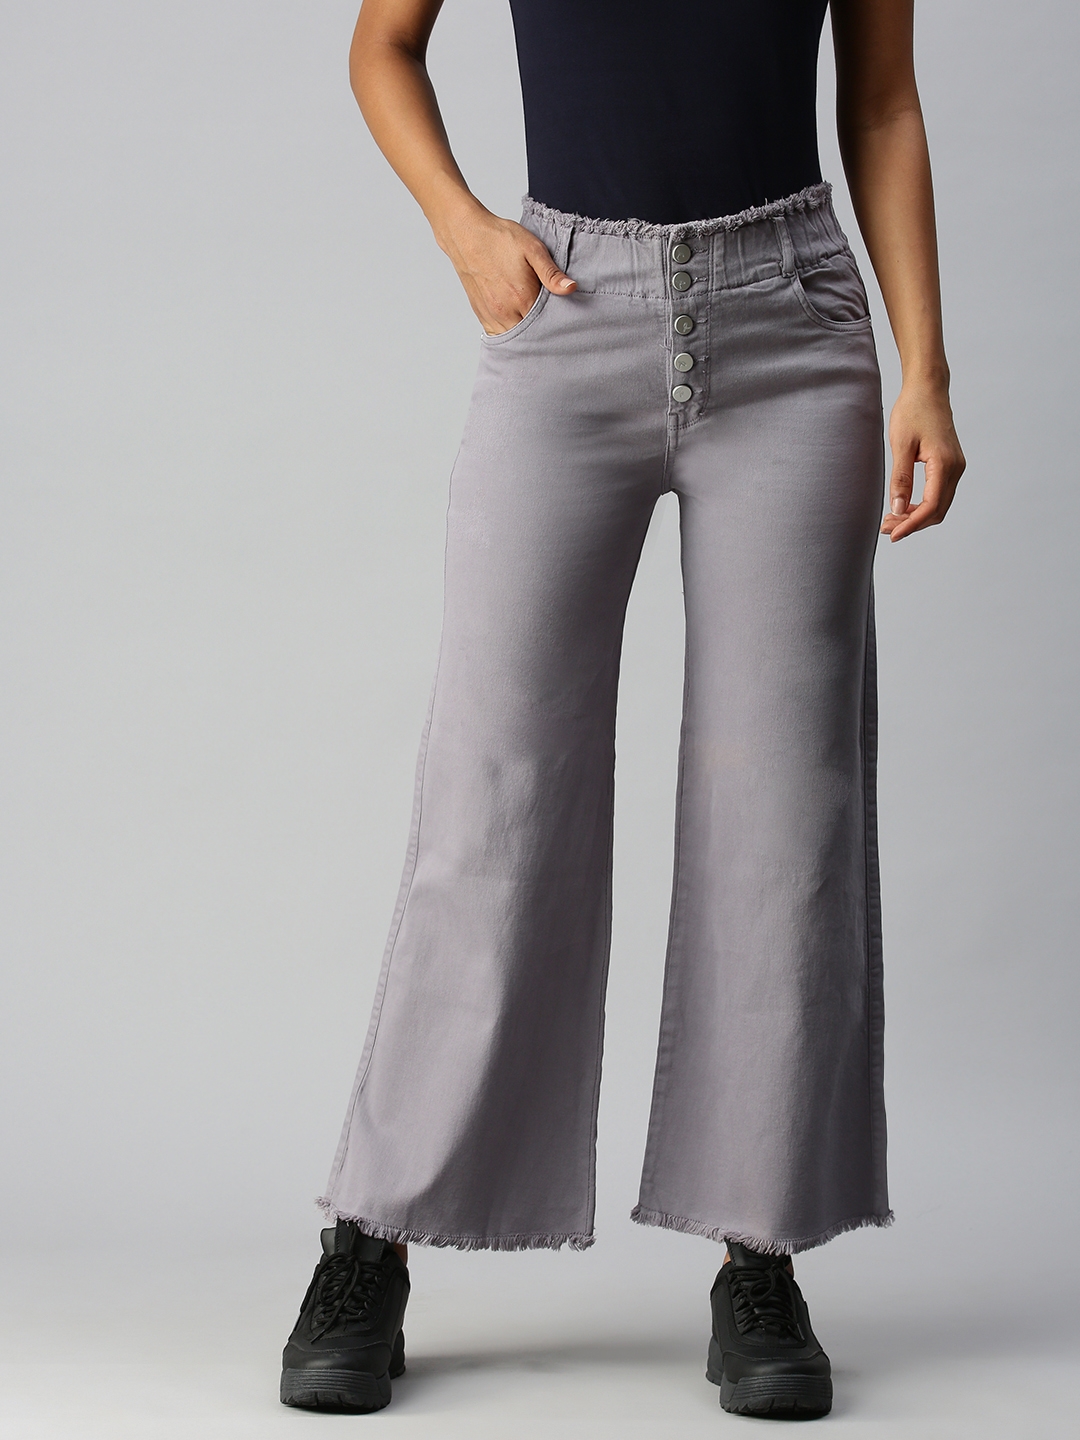 Showoff Women's Wide Leg Clean Look Grey Jeans